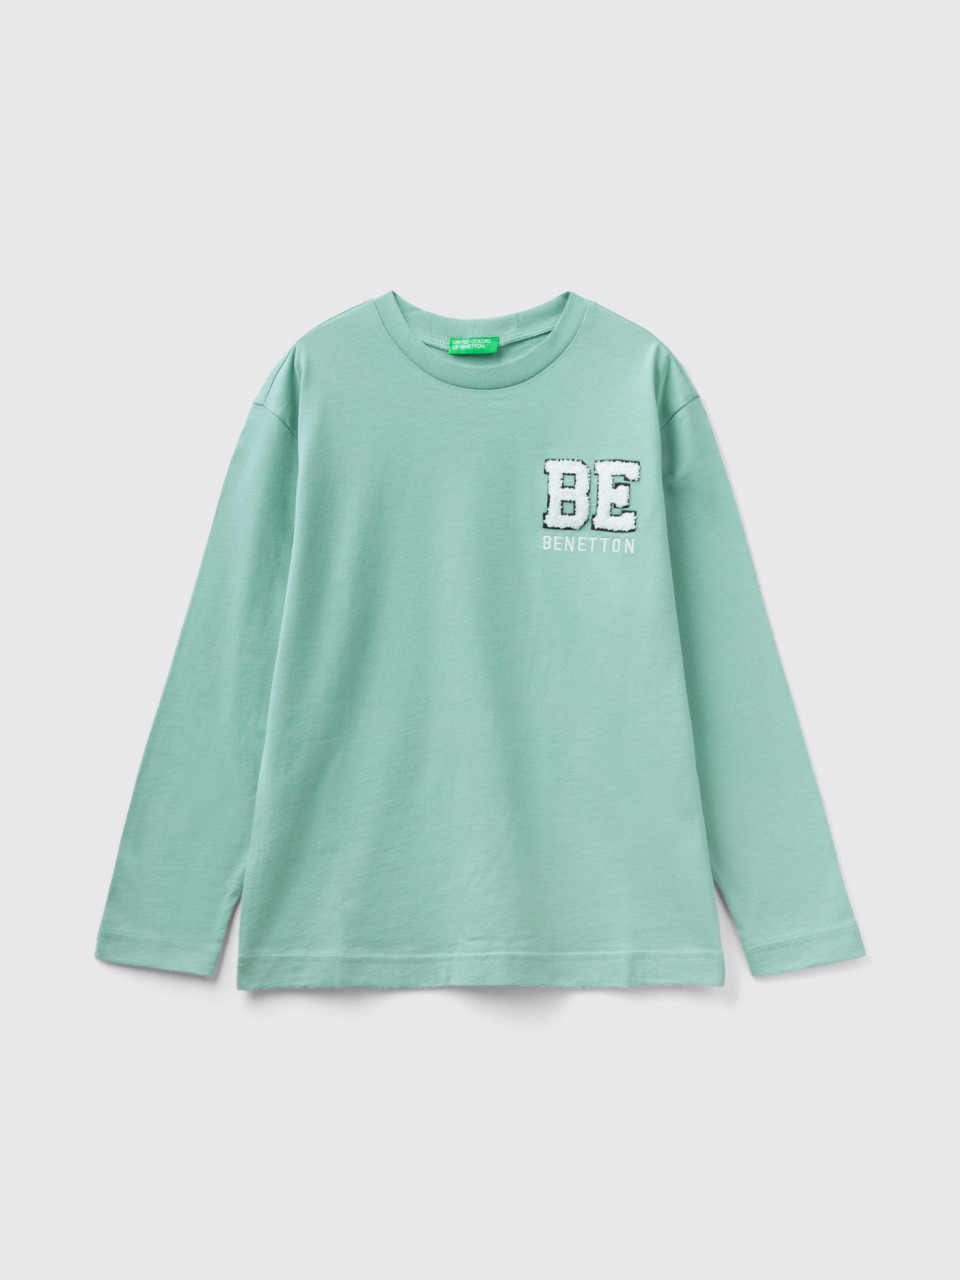 Benetton, Warm 100% Organic Cotton T-shirt, Aqua, Kids